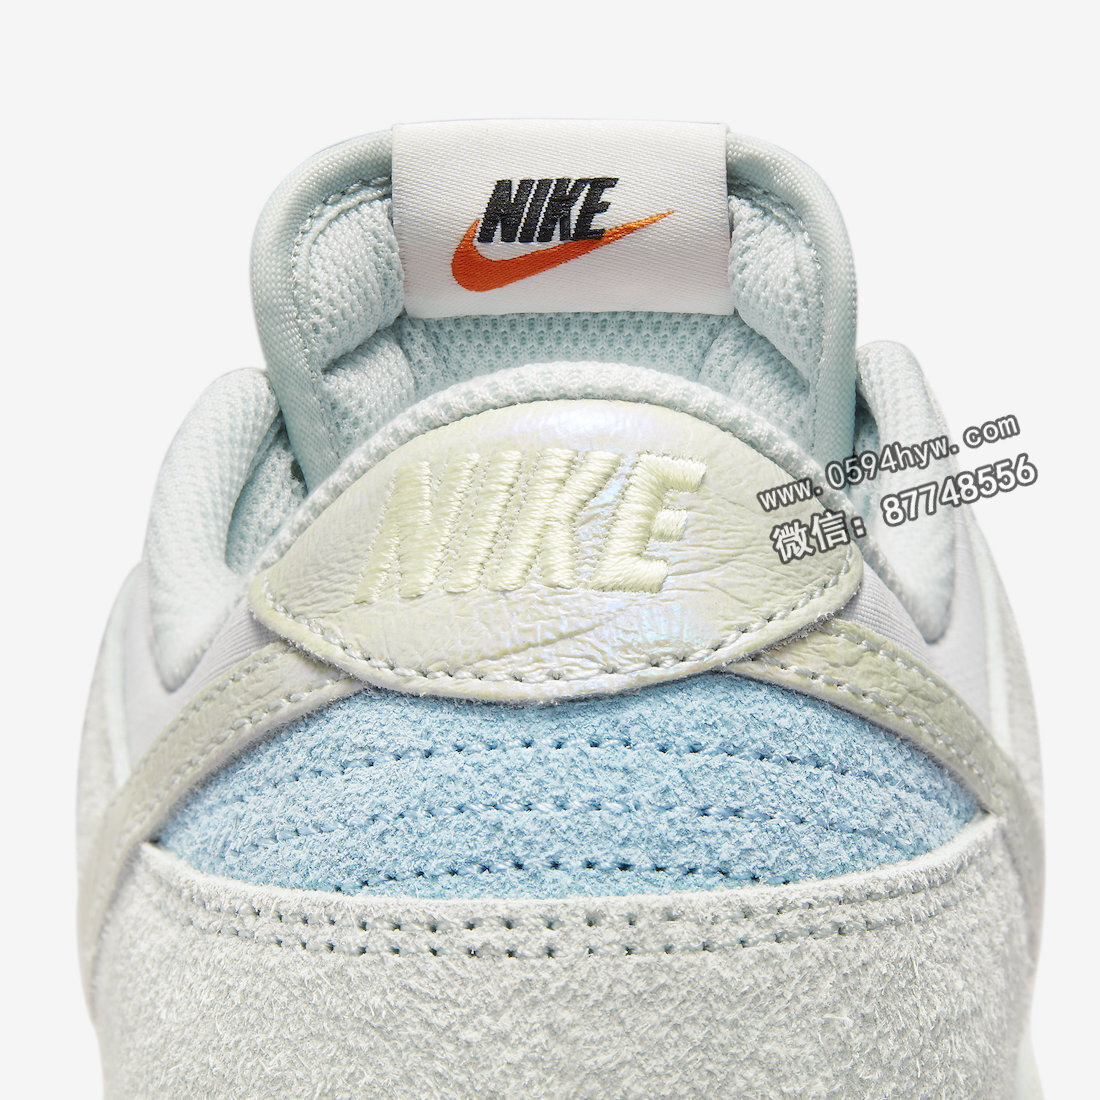 Nike-Dunk-Low-Chinook-Salmon-DV7210-001-9-1